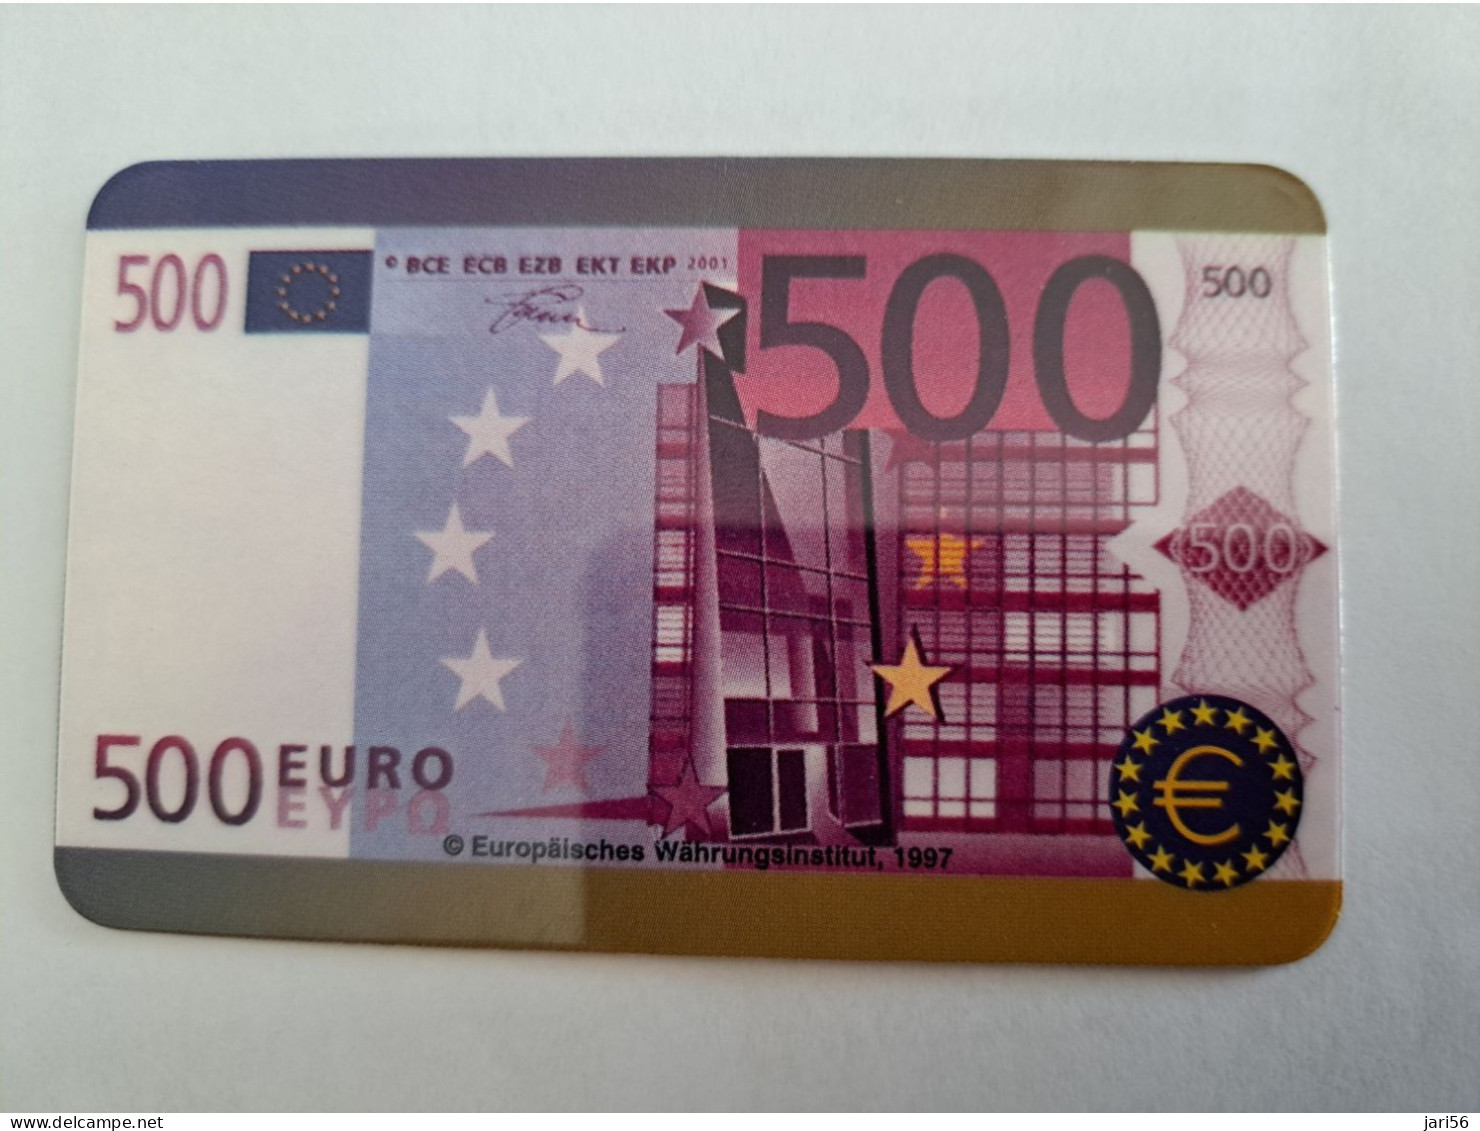 GREAT BRITAIN   20 UNITS   / EURO COINS/ BILJET 500 EURO    (date 09/98)  PREPAID CARD / MINT      **13302** - Verzamelingen